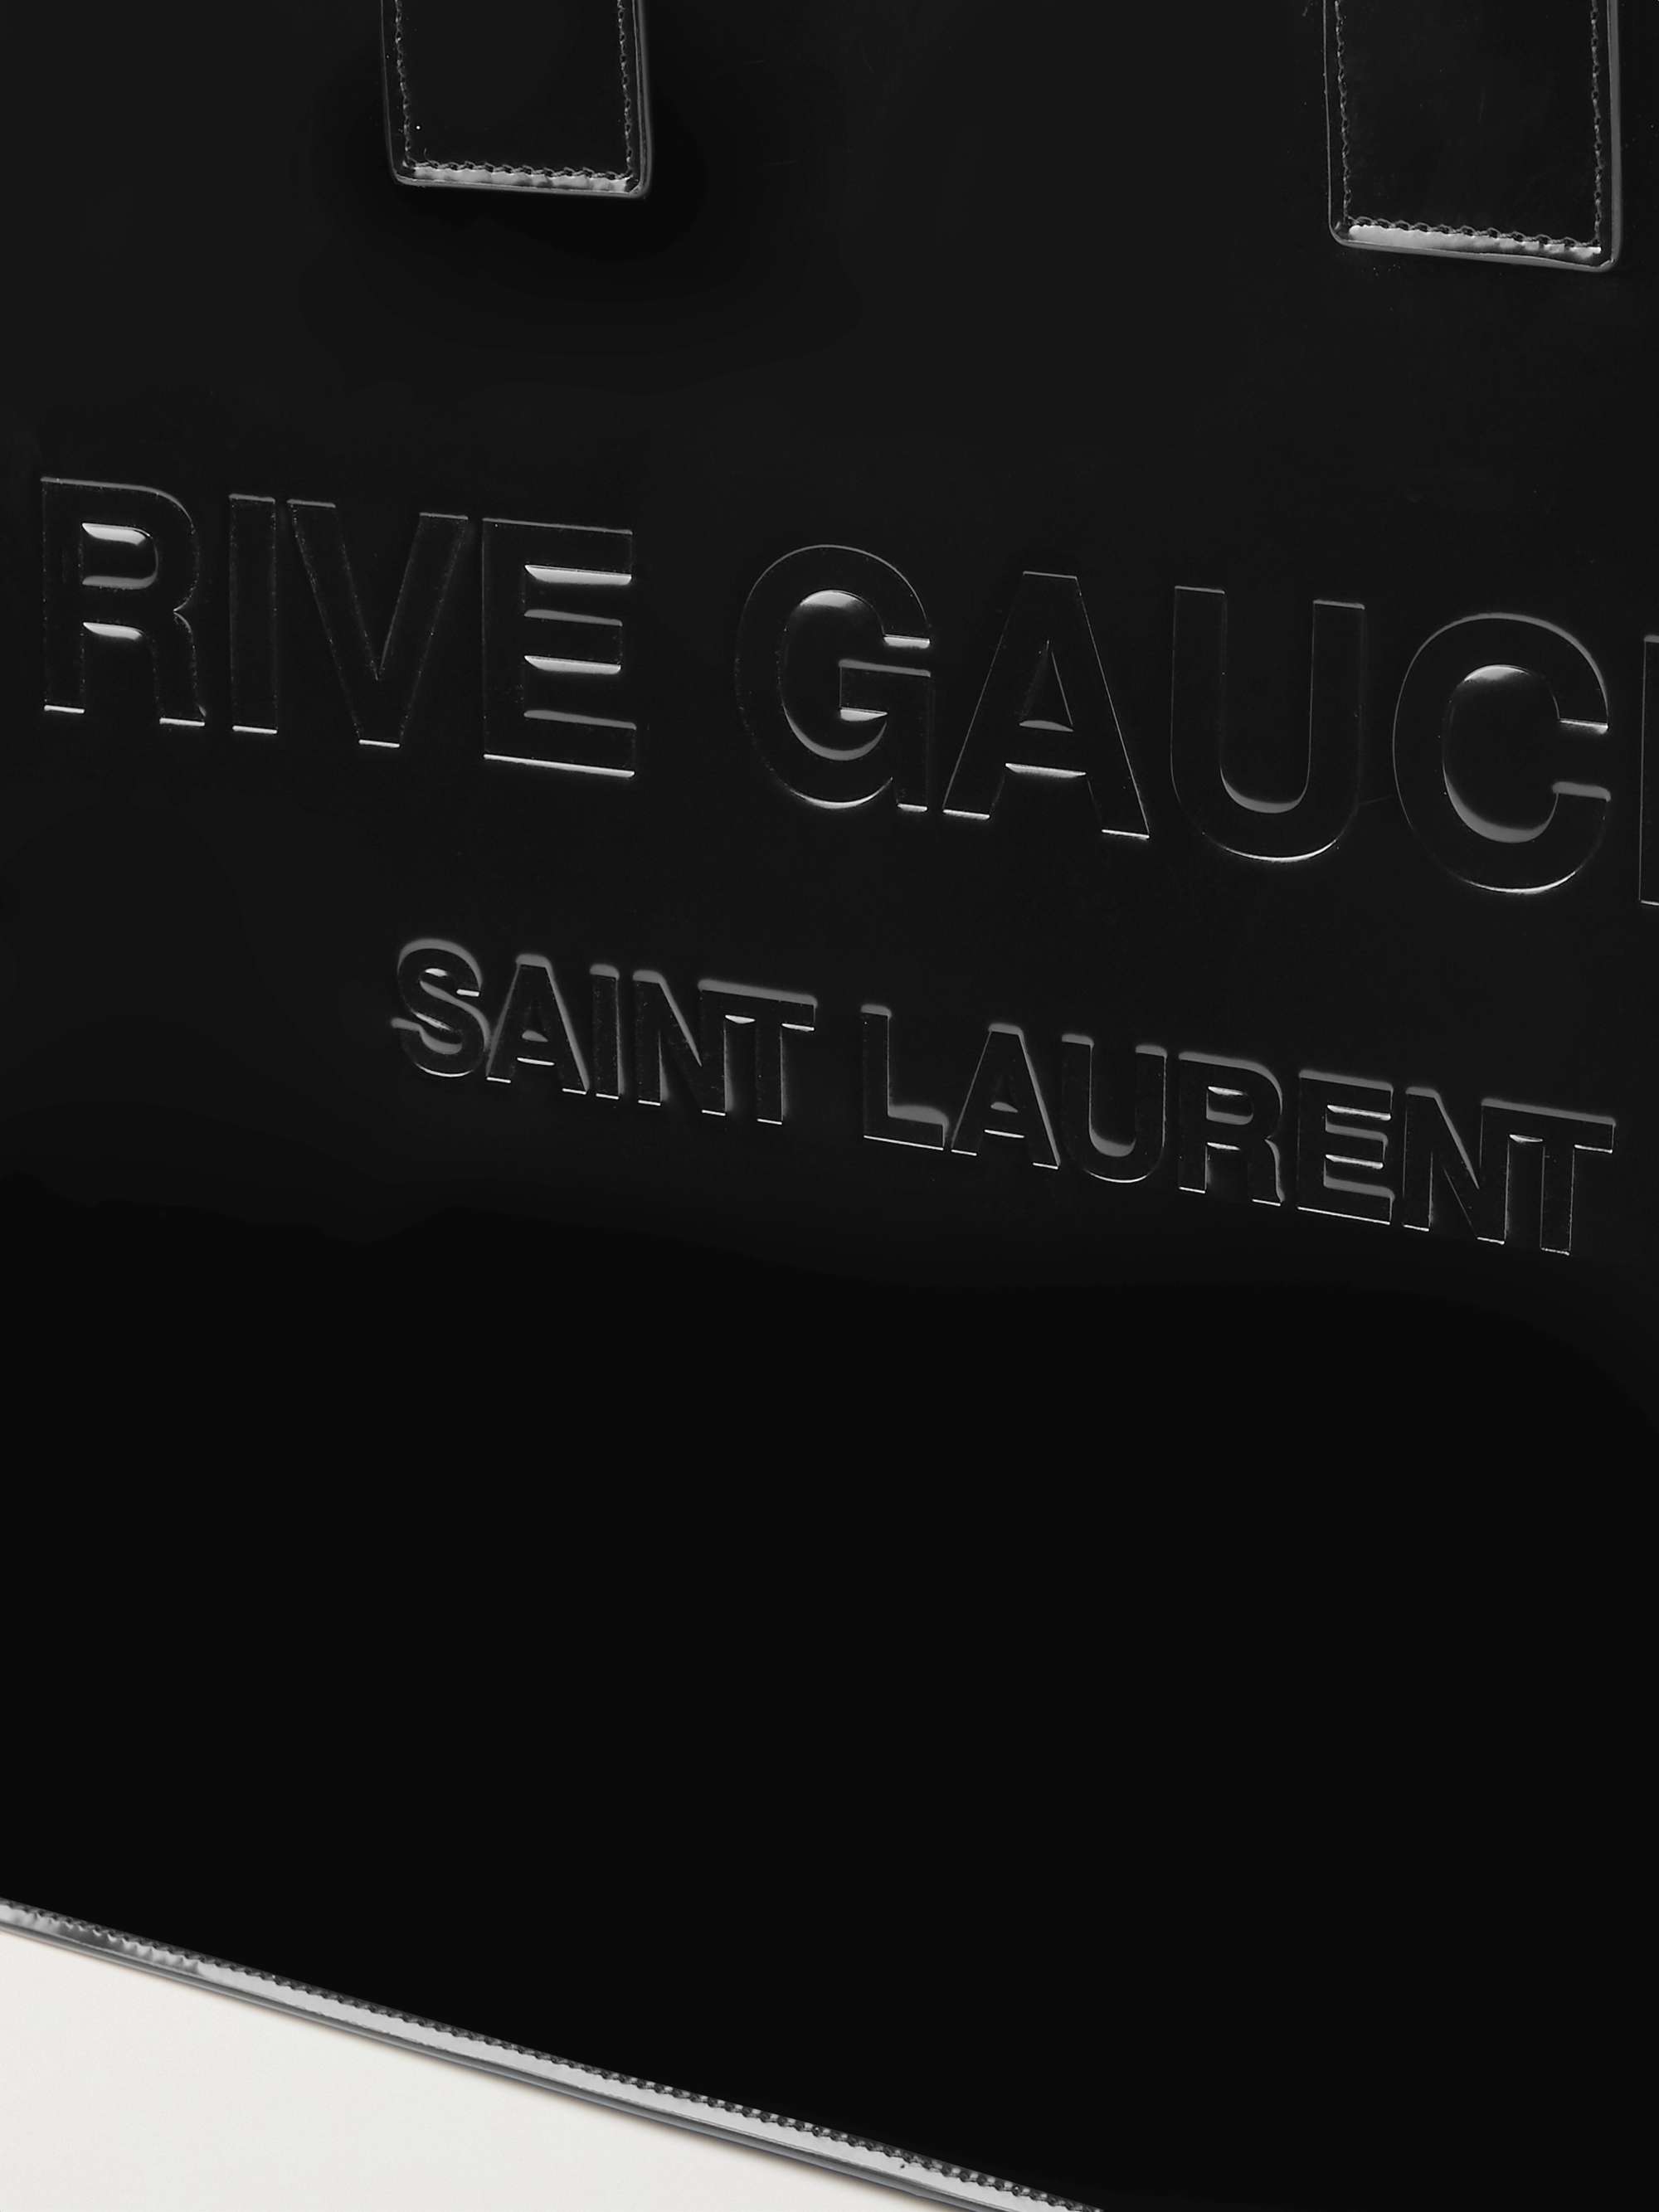 Rive Gauche Large Tote Bag in Black - Saint Laurent